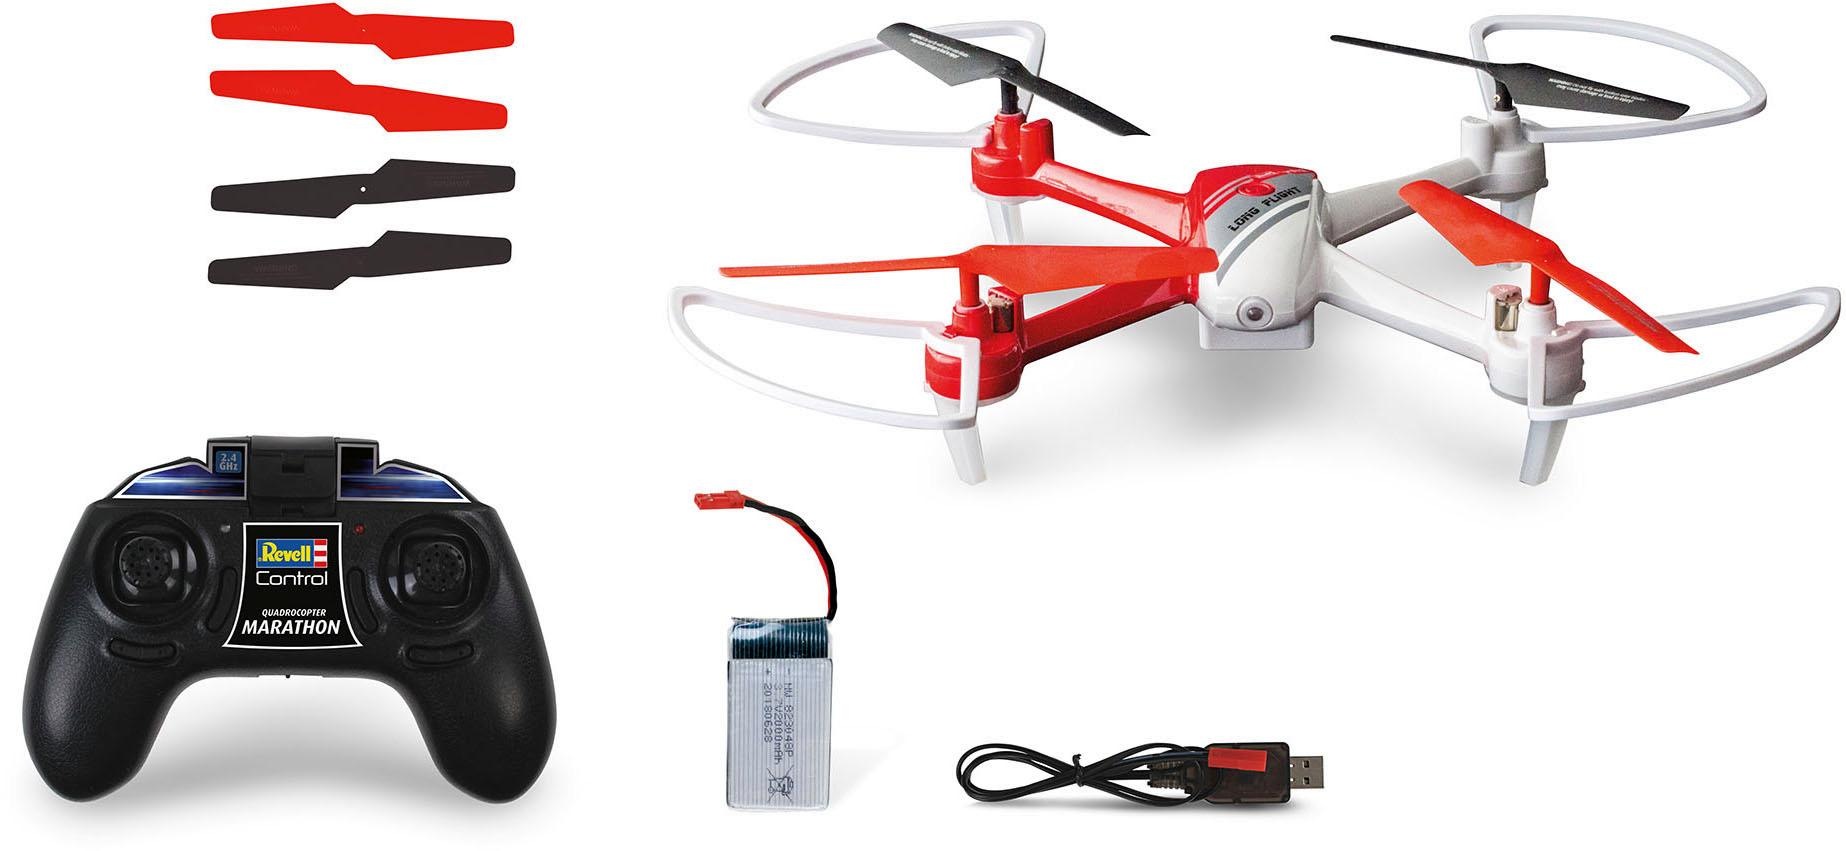 Revell® RC-Quadrocopter »Revell® control, Marathon X-treme Line, 2,4 GHz«, zweifarbige LED-Beleuchtung